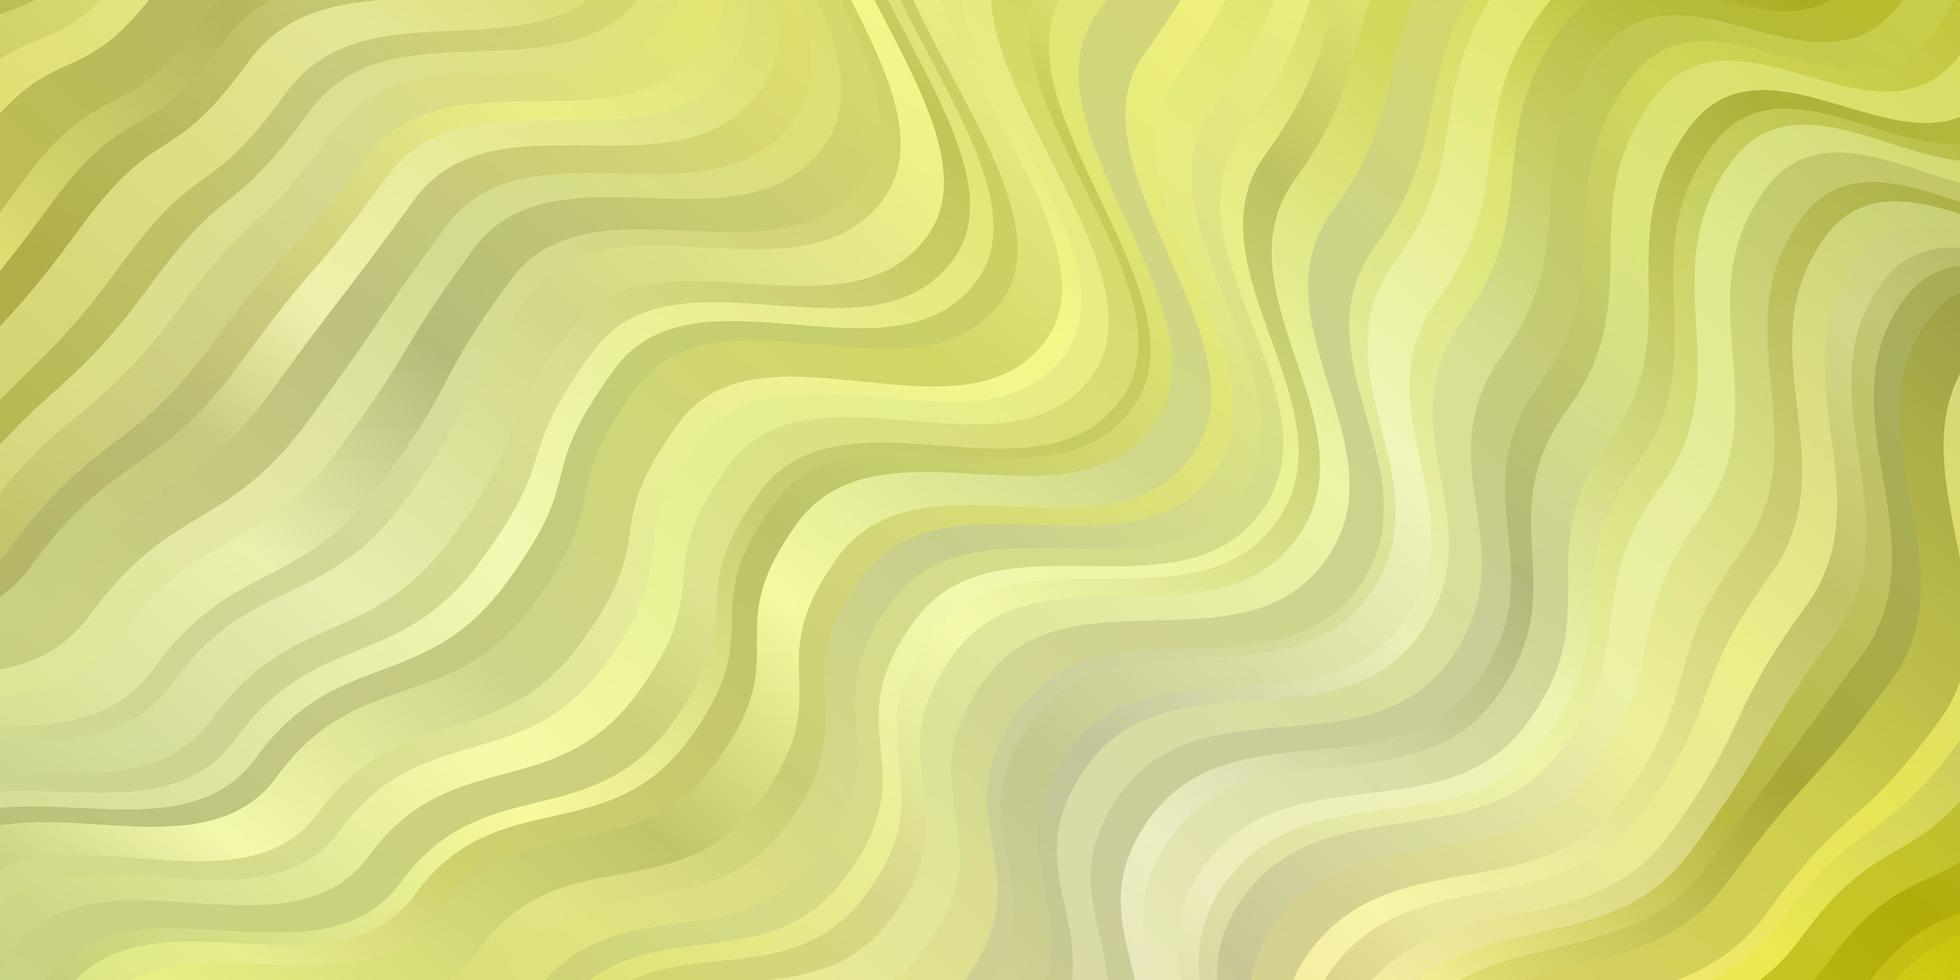 layout de vetor verde e amarelo claro com curvas.